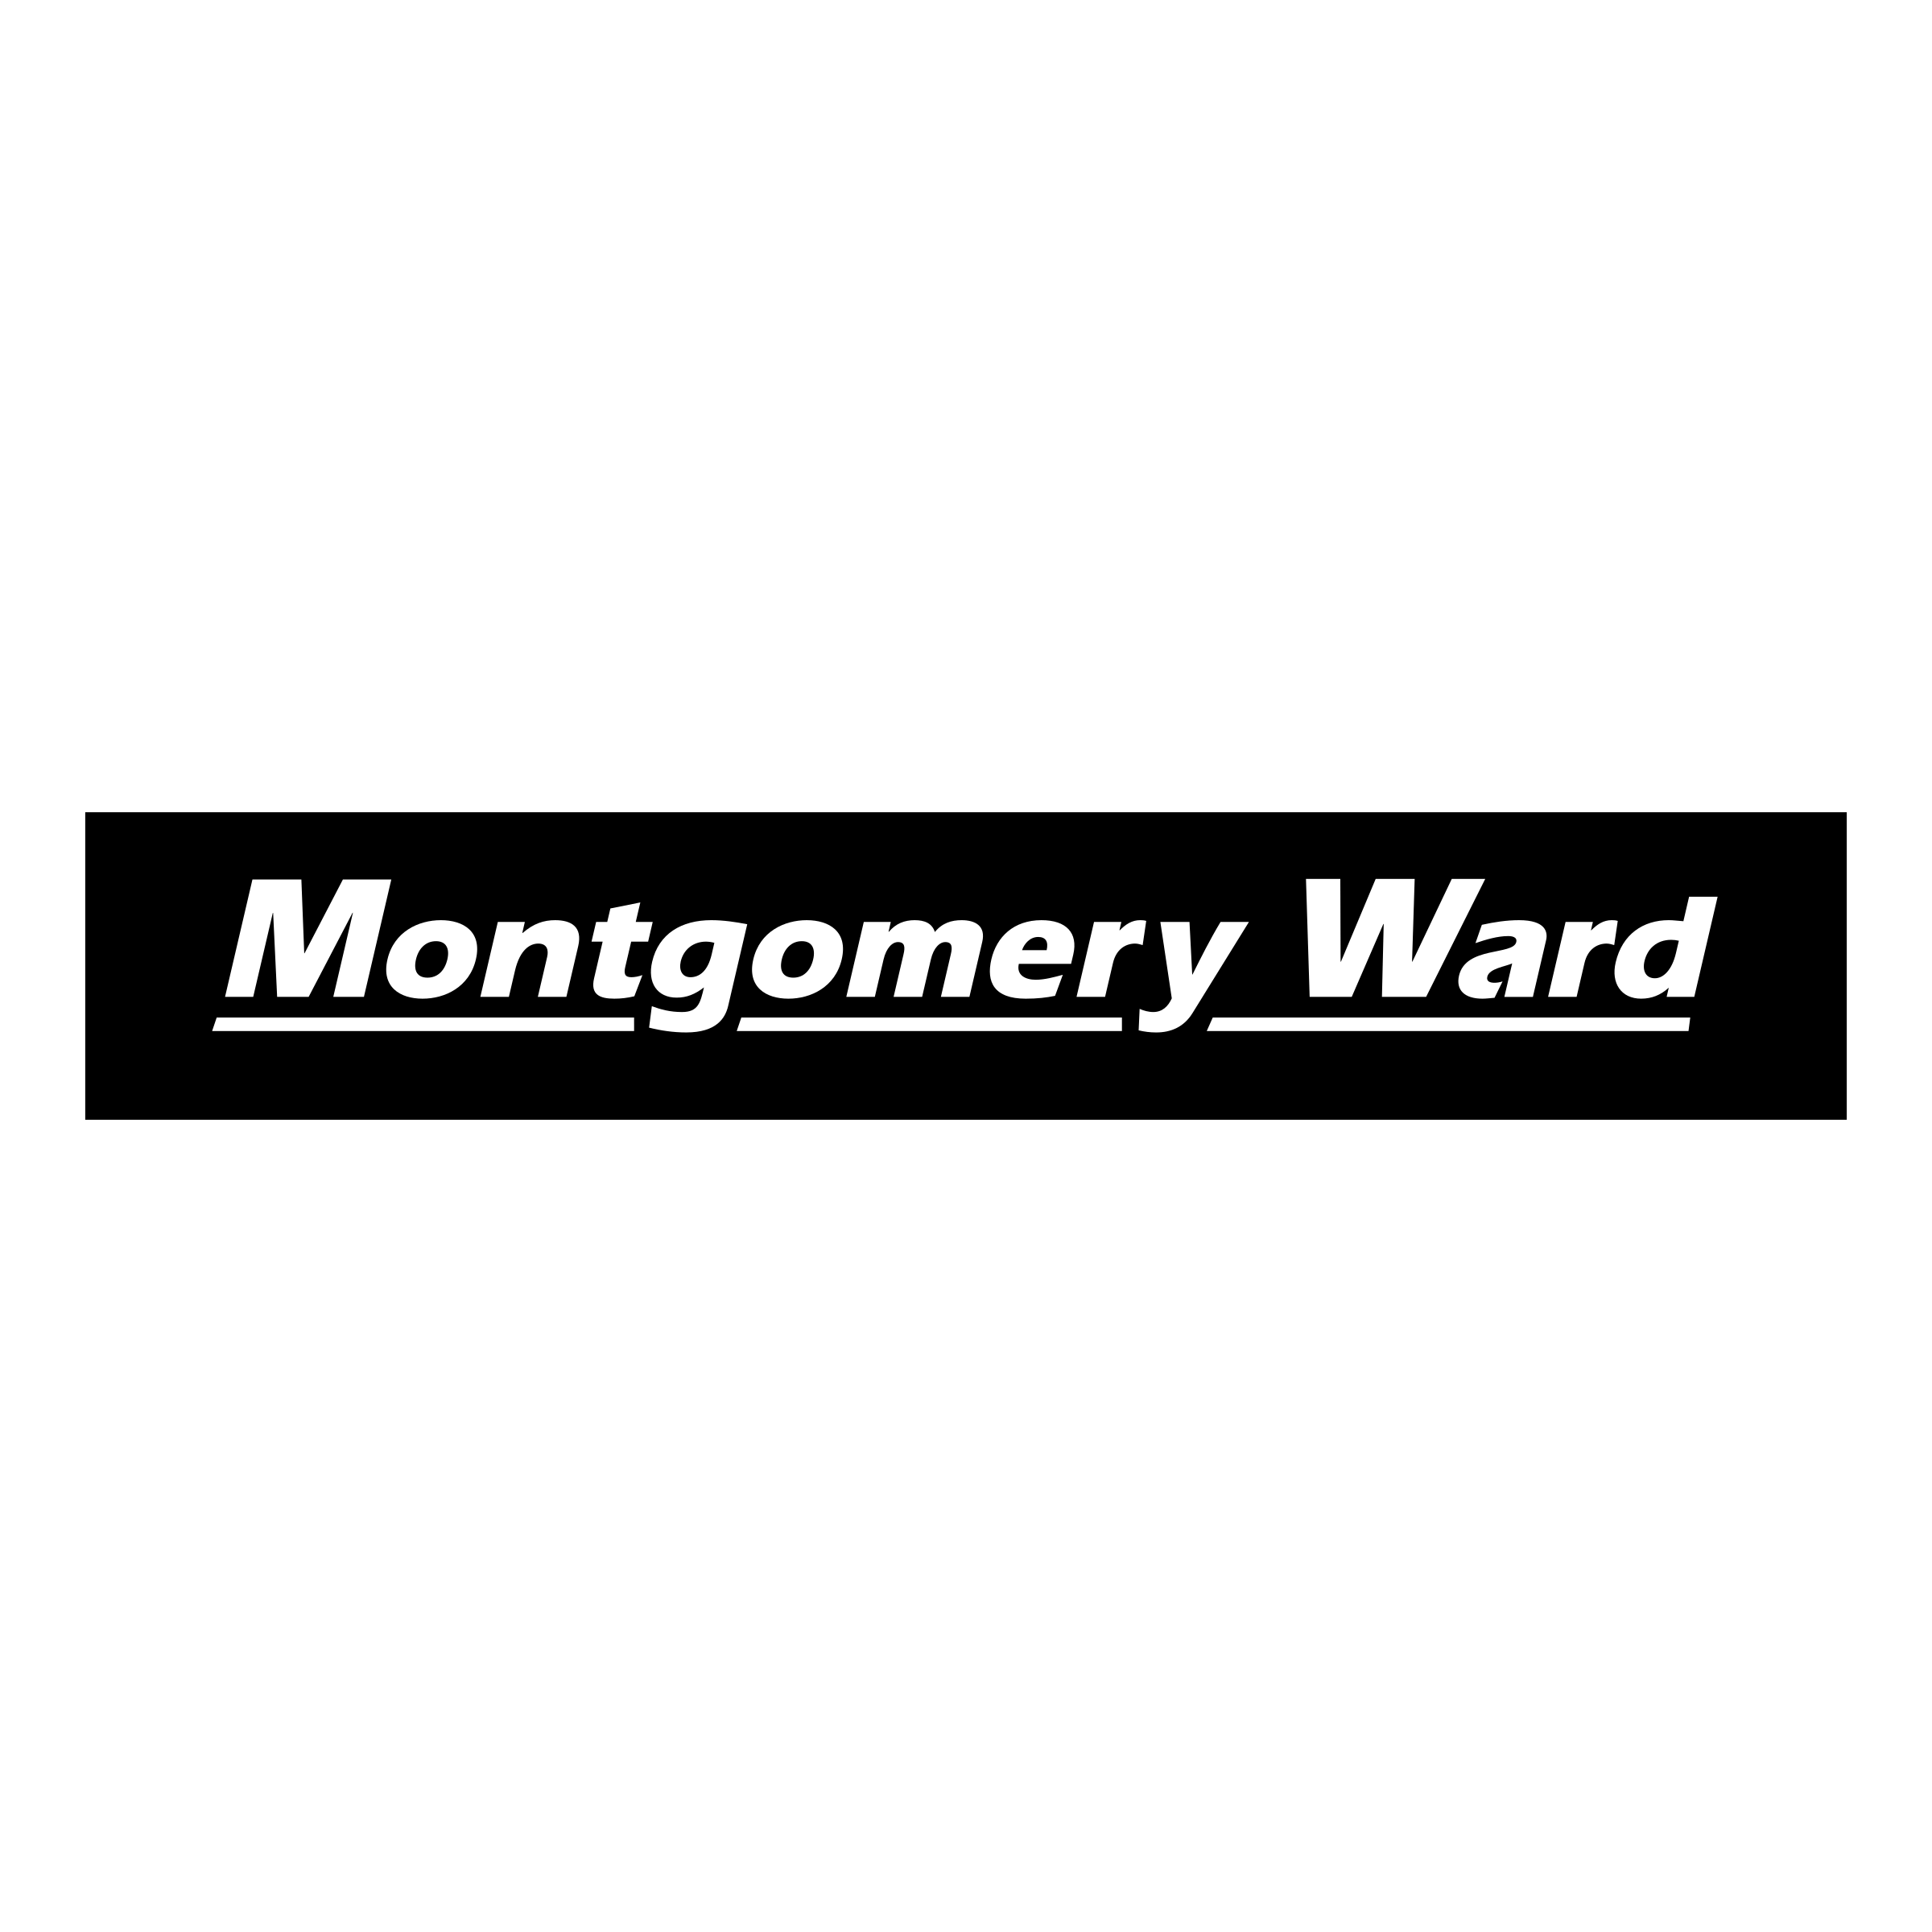 Ward Logo - Montgomery Ward Logo PNG Transparent & SVG Vector - Freebie Supply